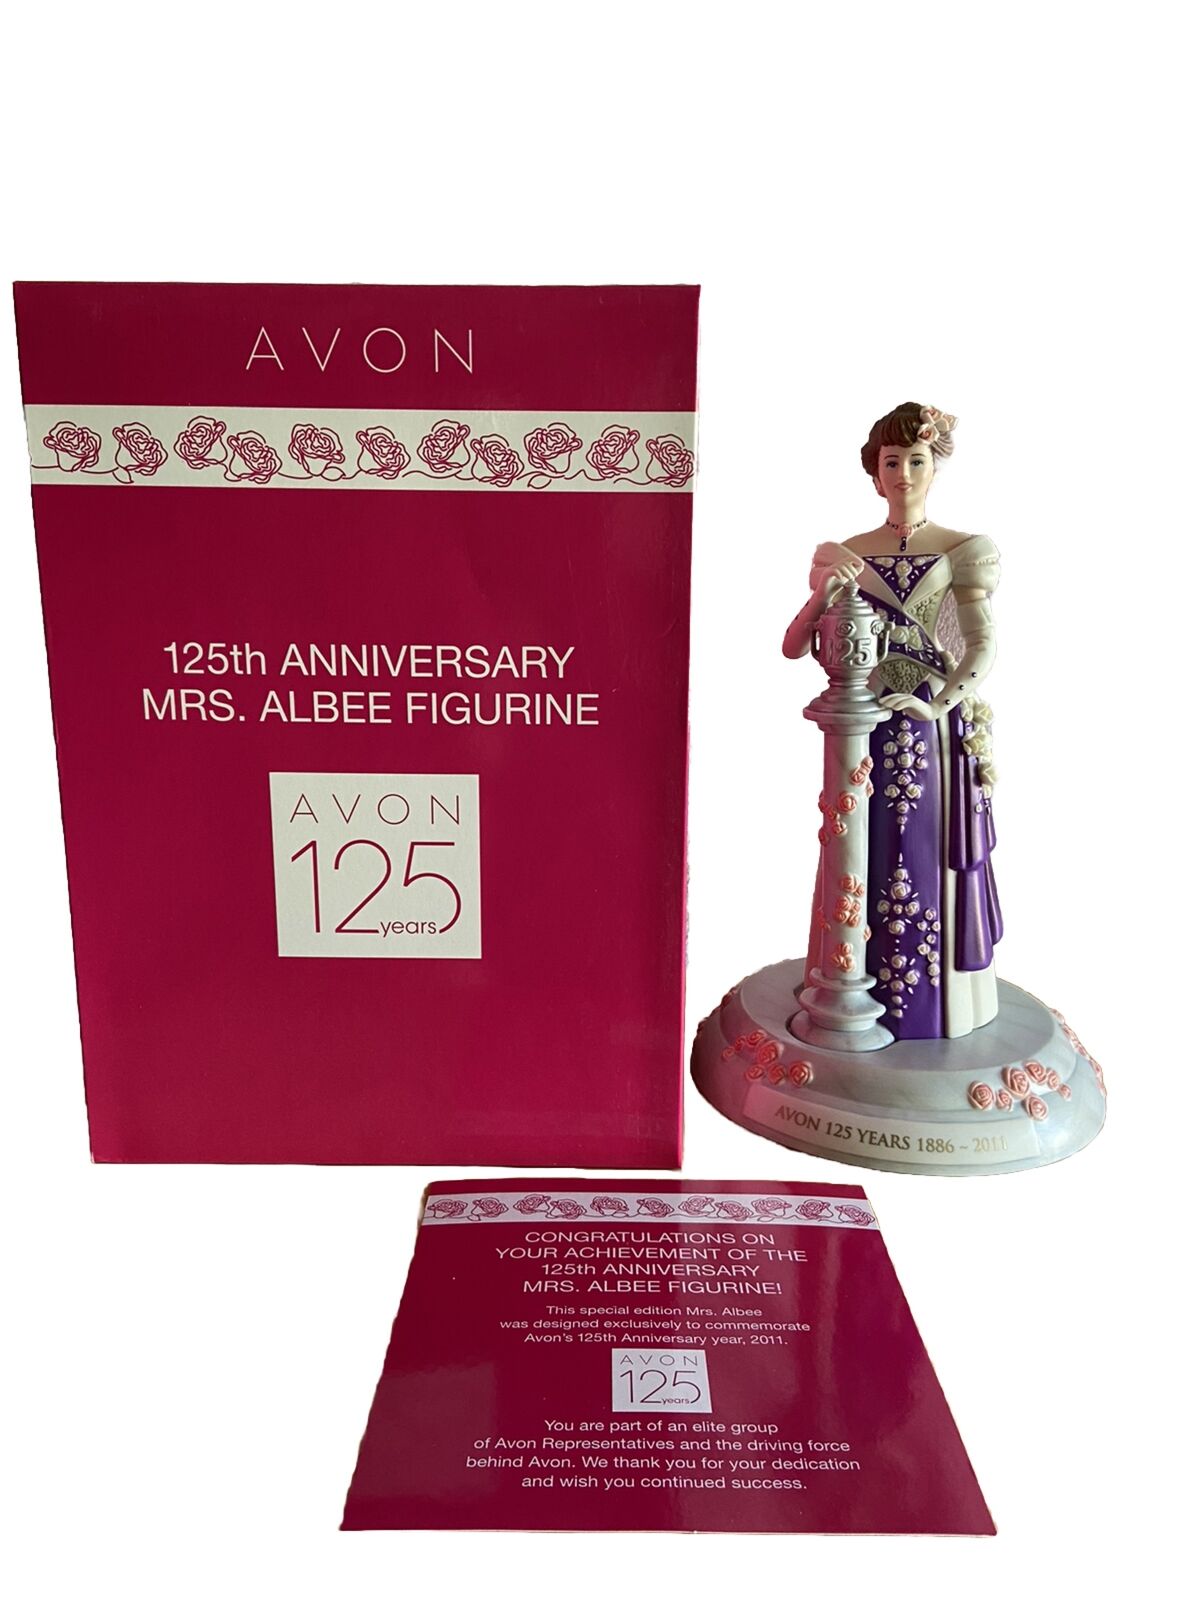 AVON Ms. Albee Presidents Club Figurine 125th Anniversary